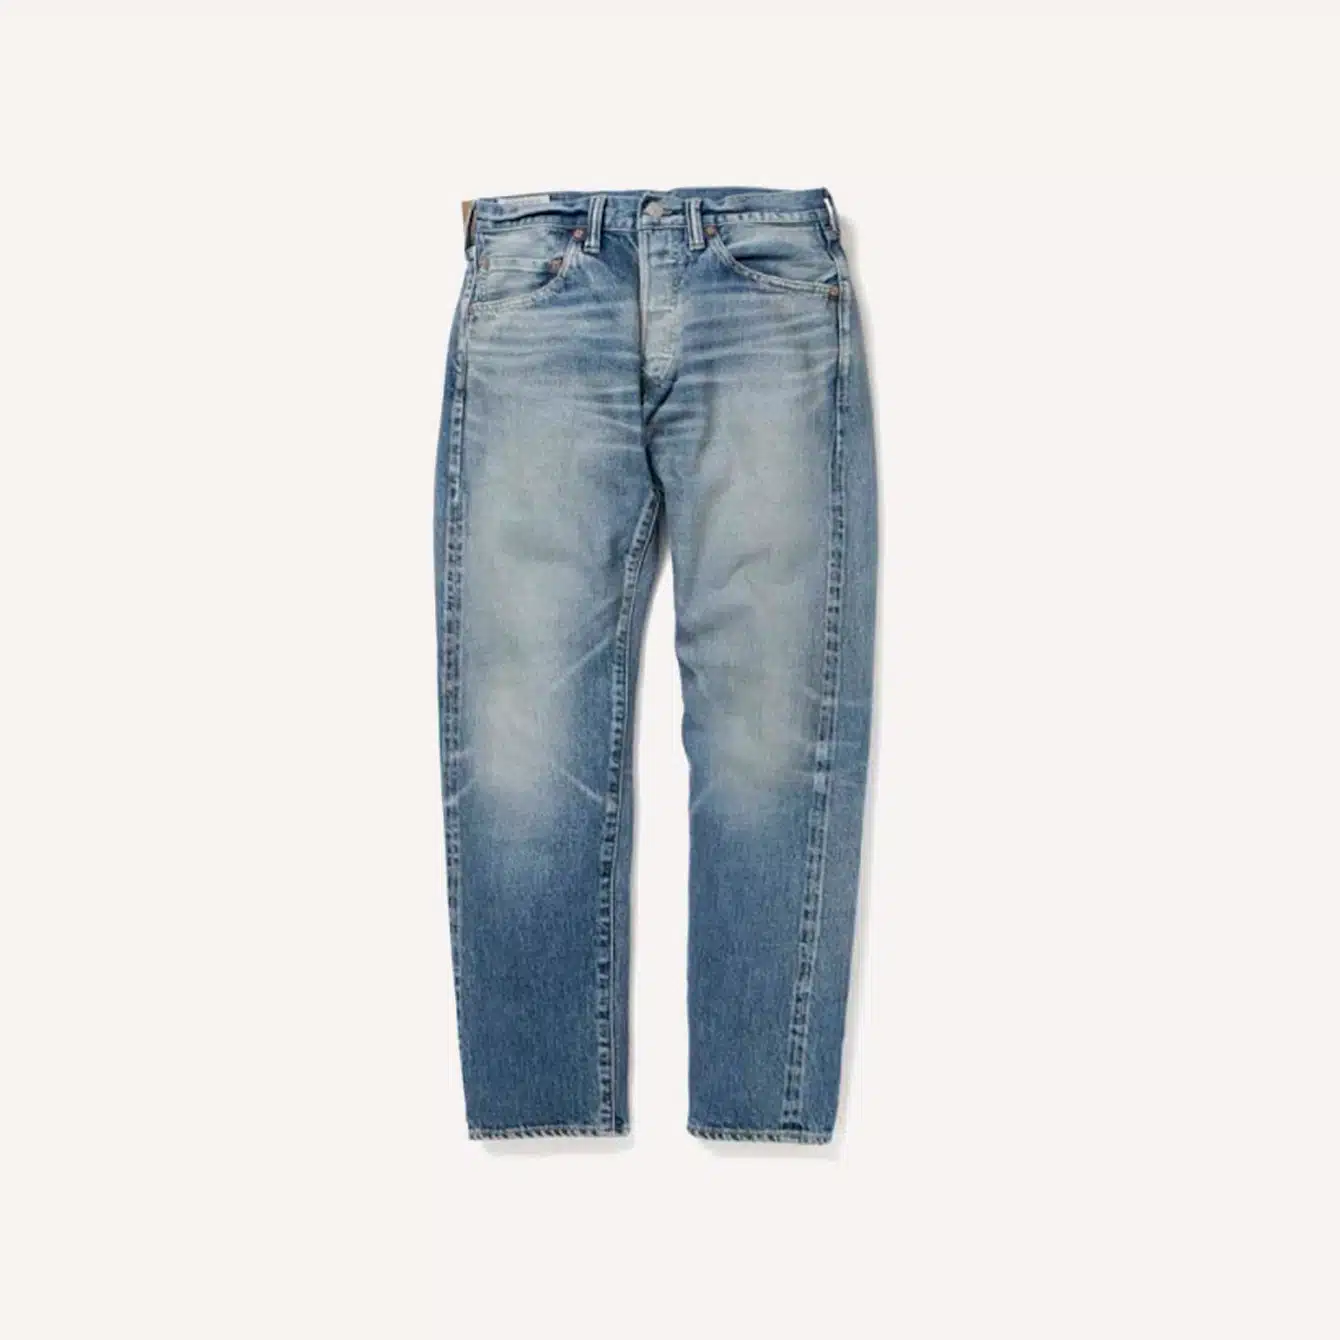 Okayama Denim Studio D Artisan Distressed Ivy Selvedge Jeans